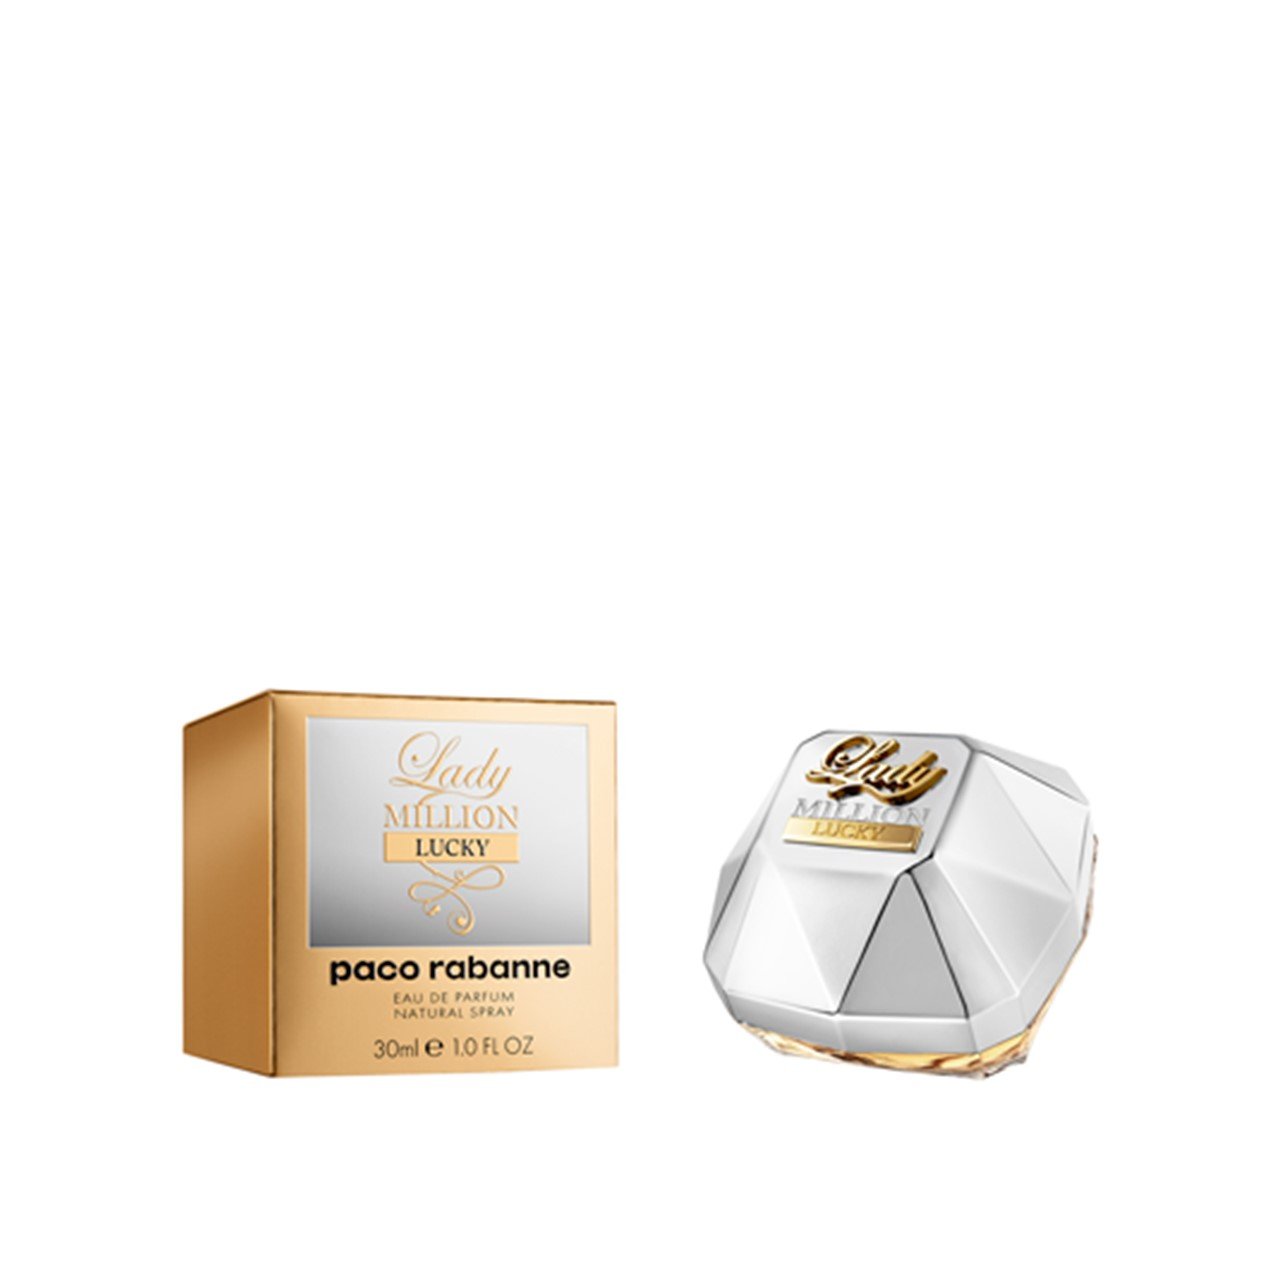 turnering Tilskud veltalende Buy Paco Rabanne Lady Million Lucky Eau de Parfum 30ml (1.0fl oz) · USA